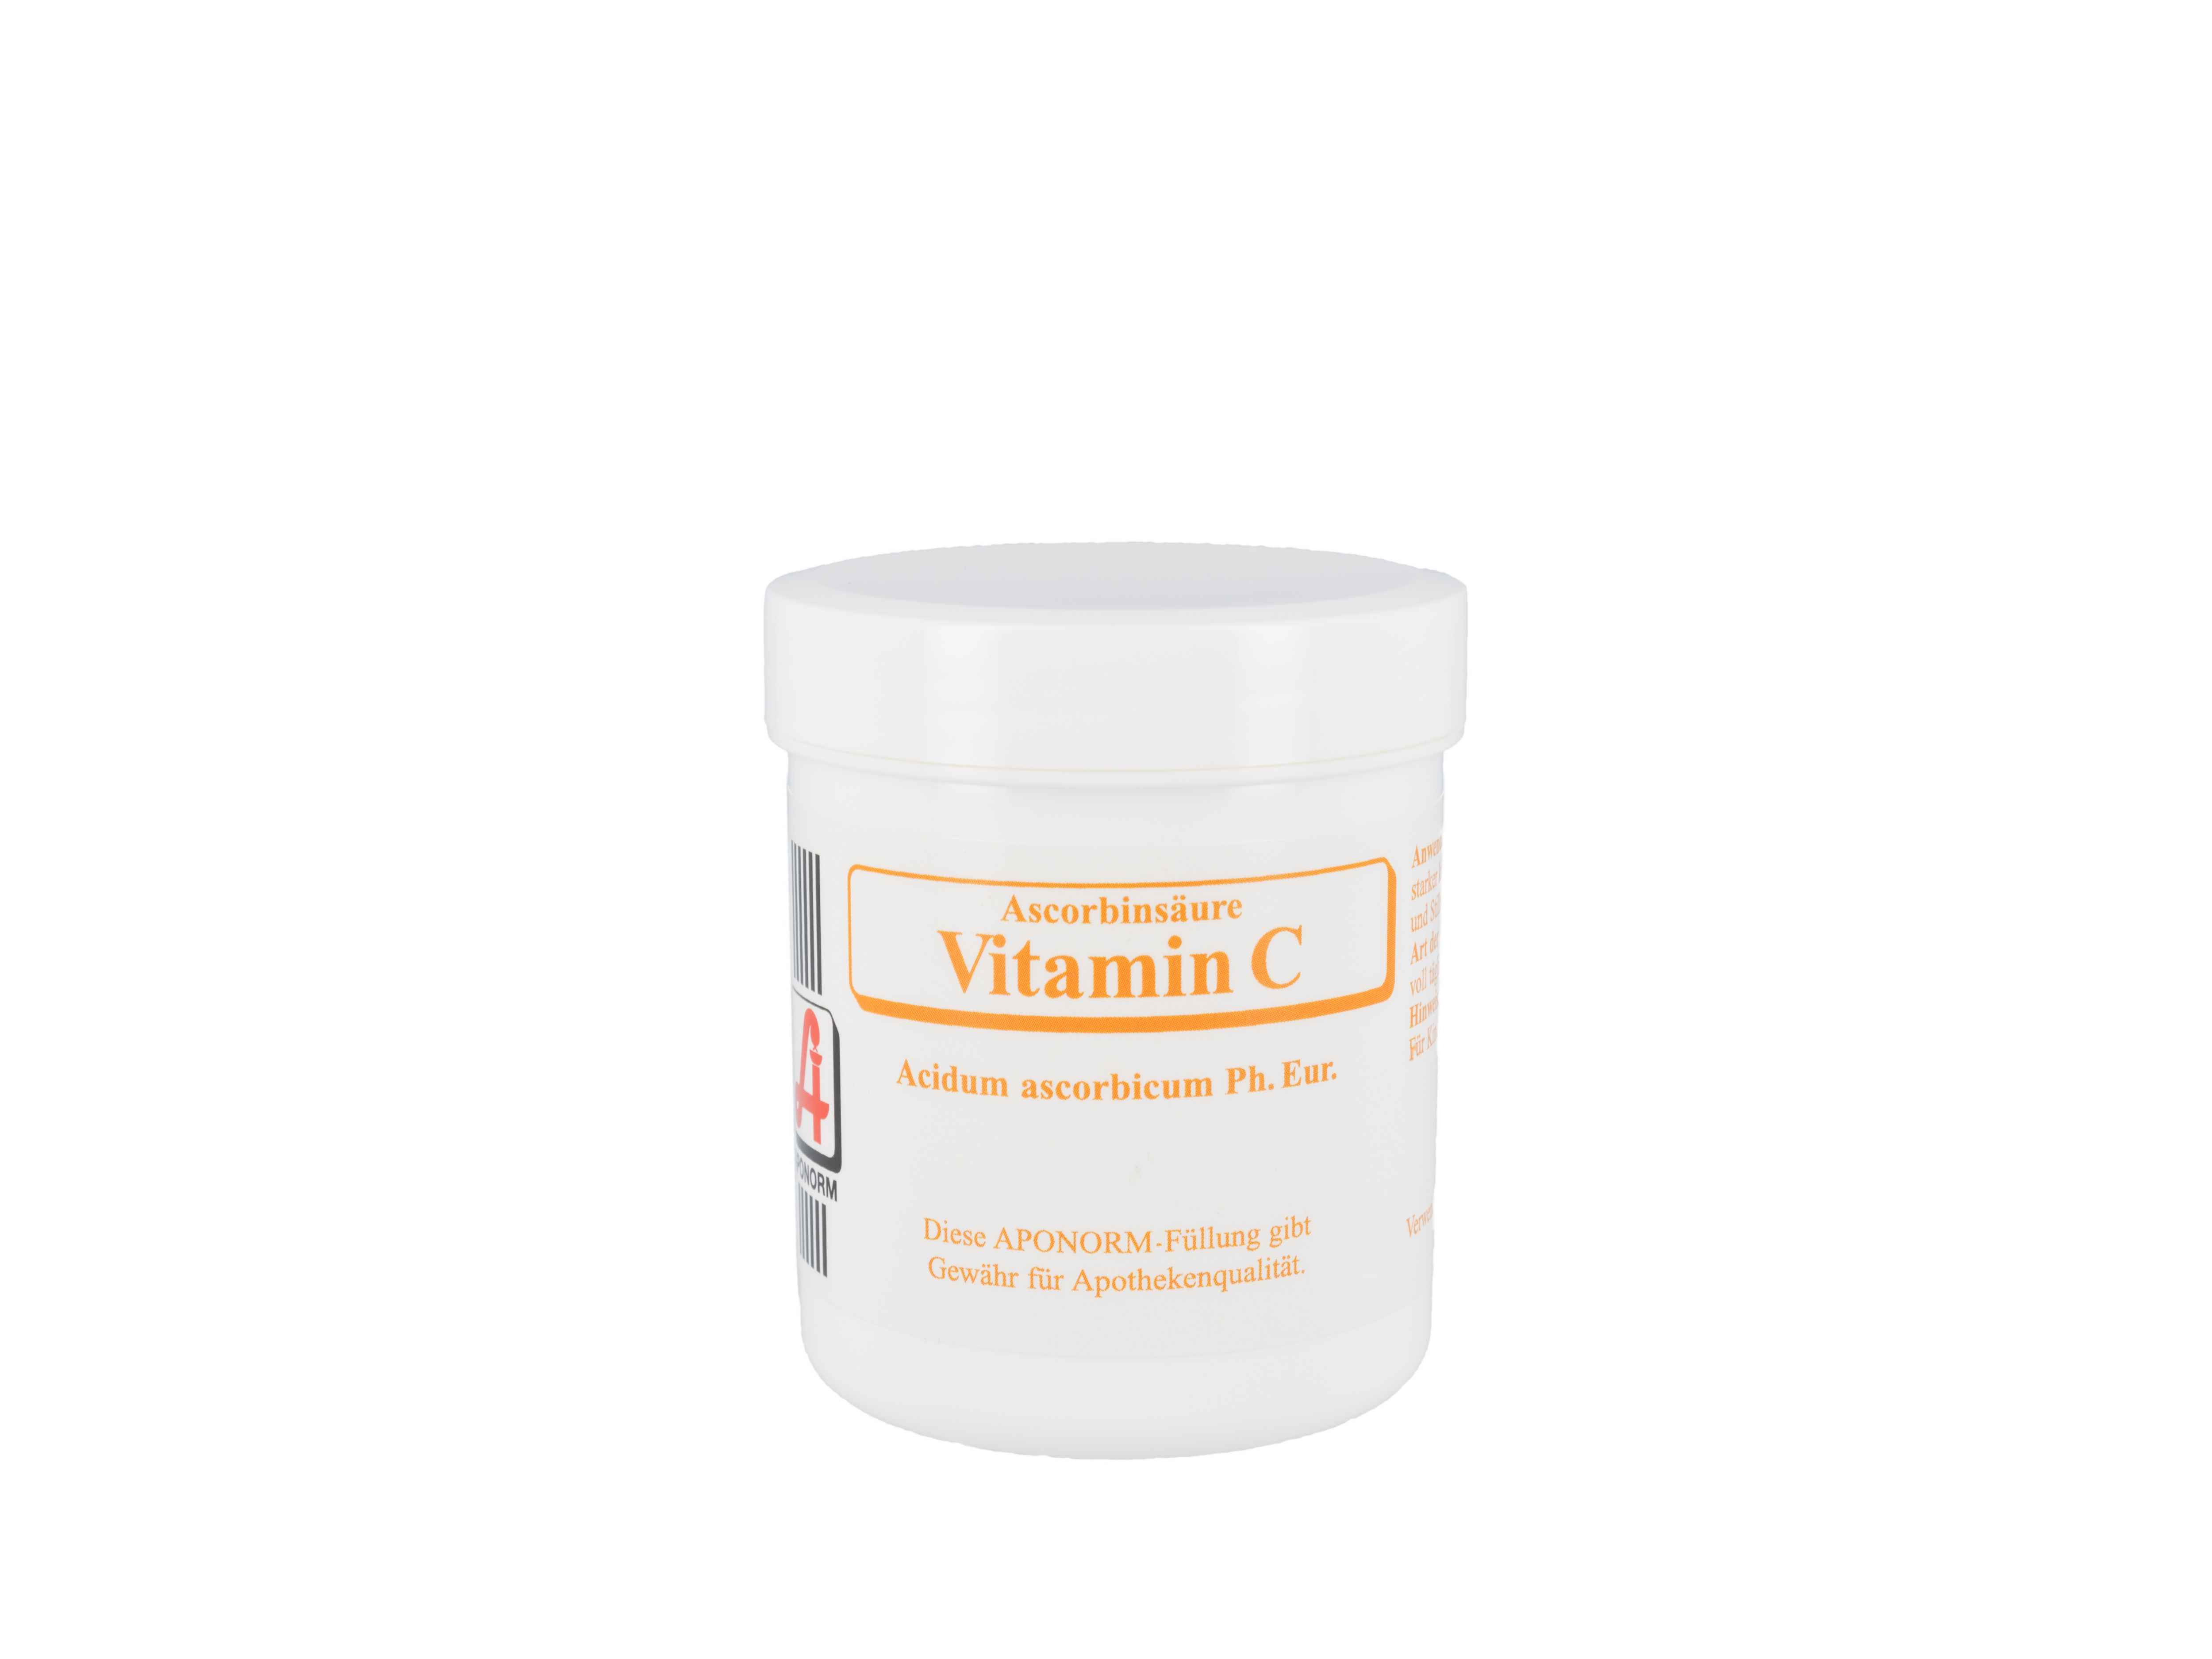    Kunststoff - Tiegel Ascorbinsäure (Vitamin C) - 100g